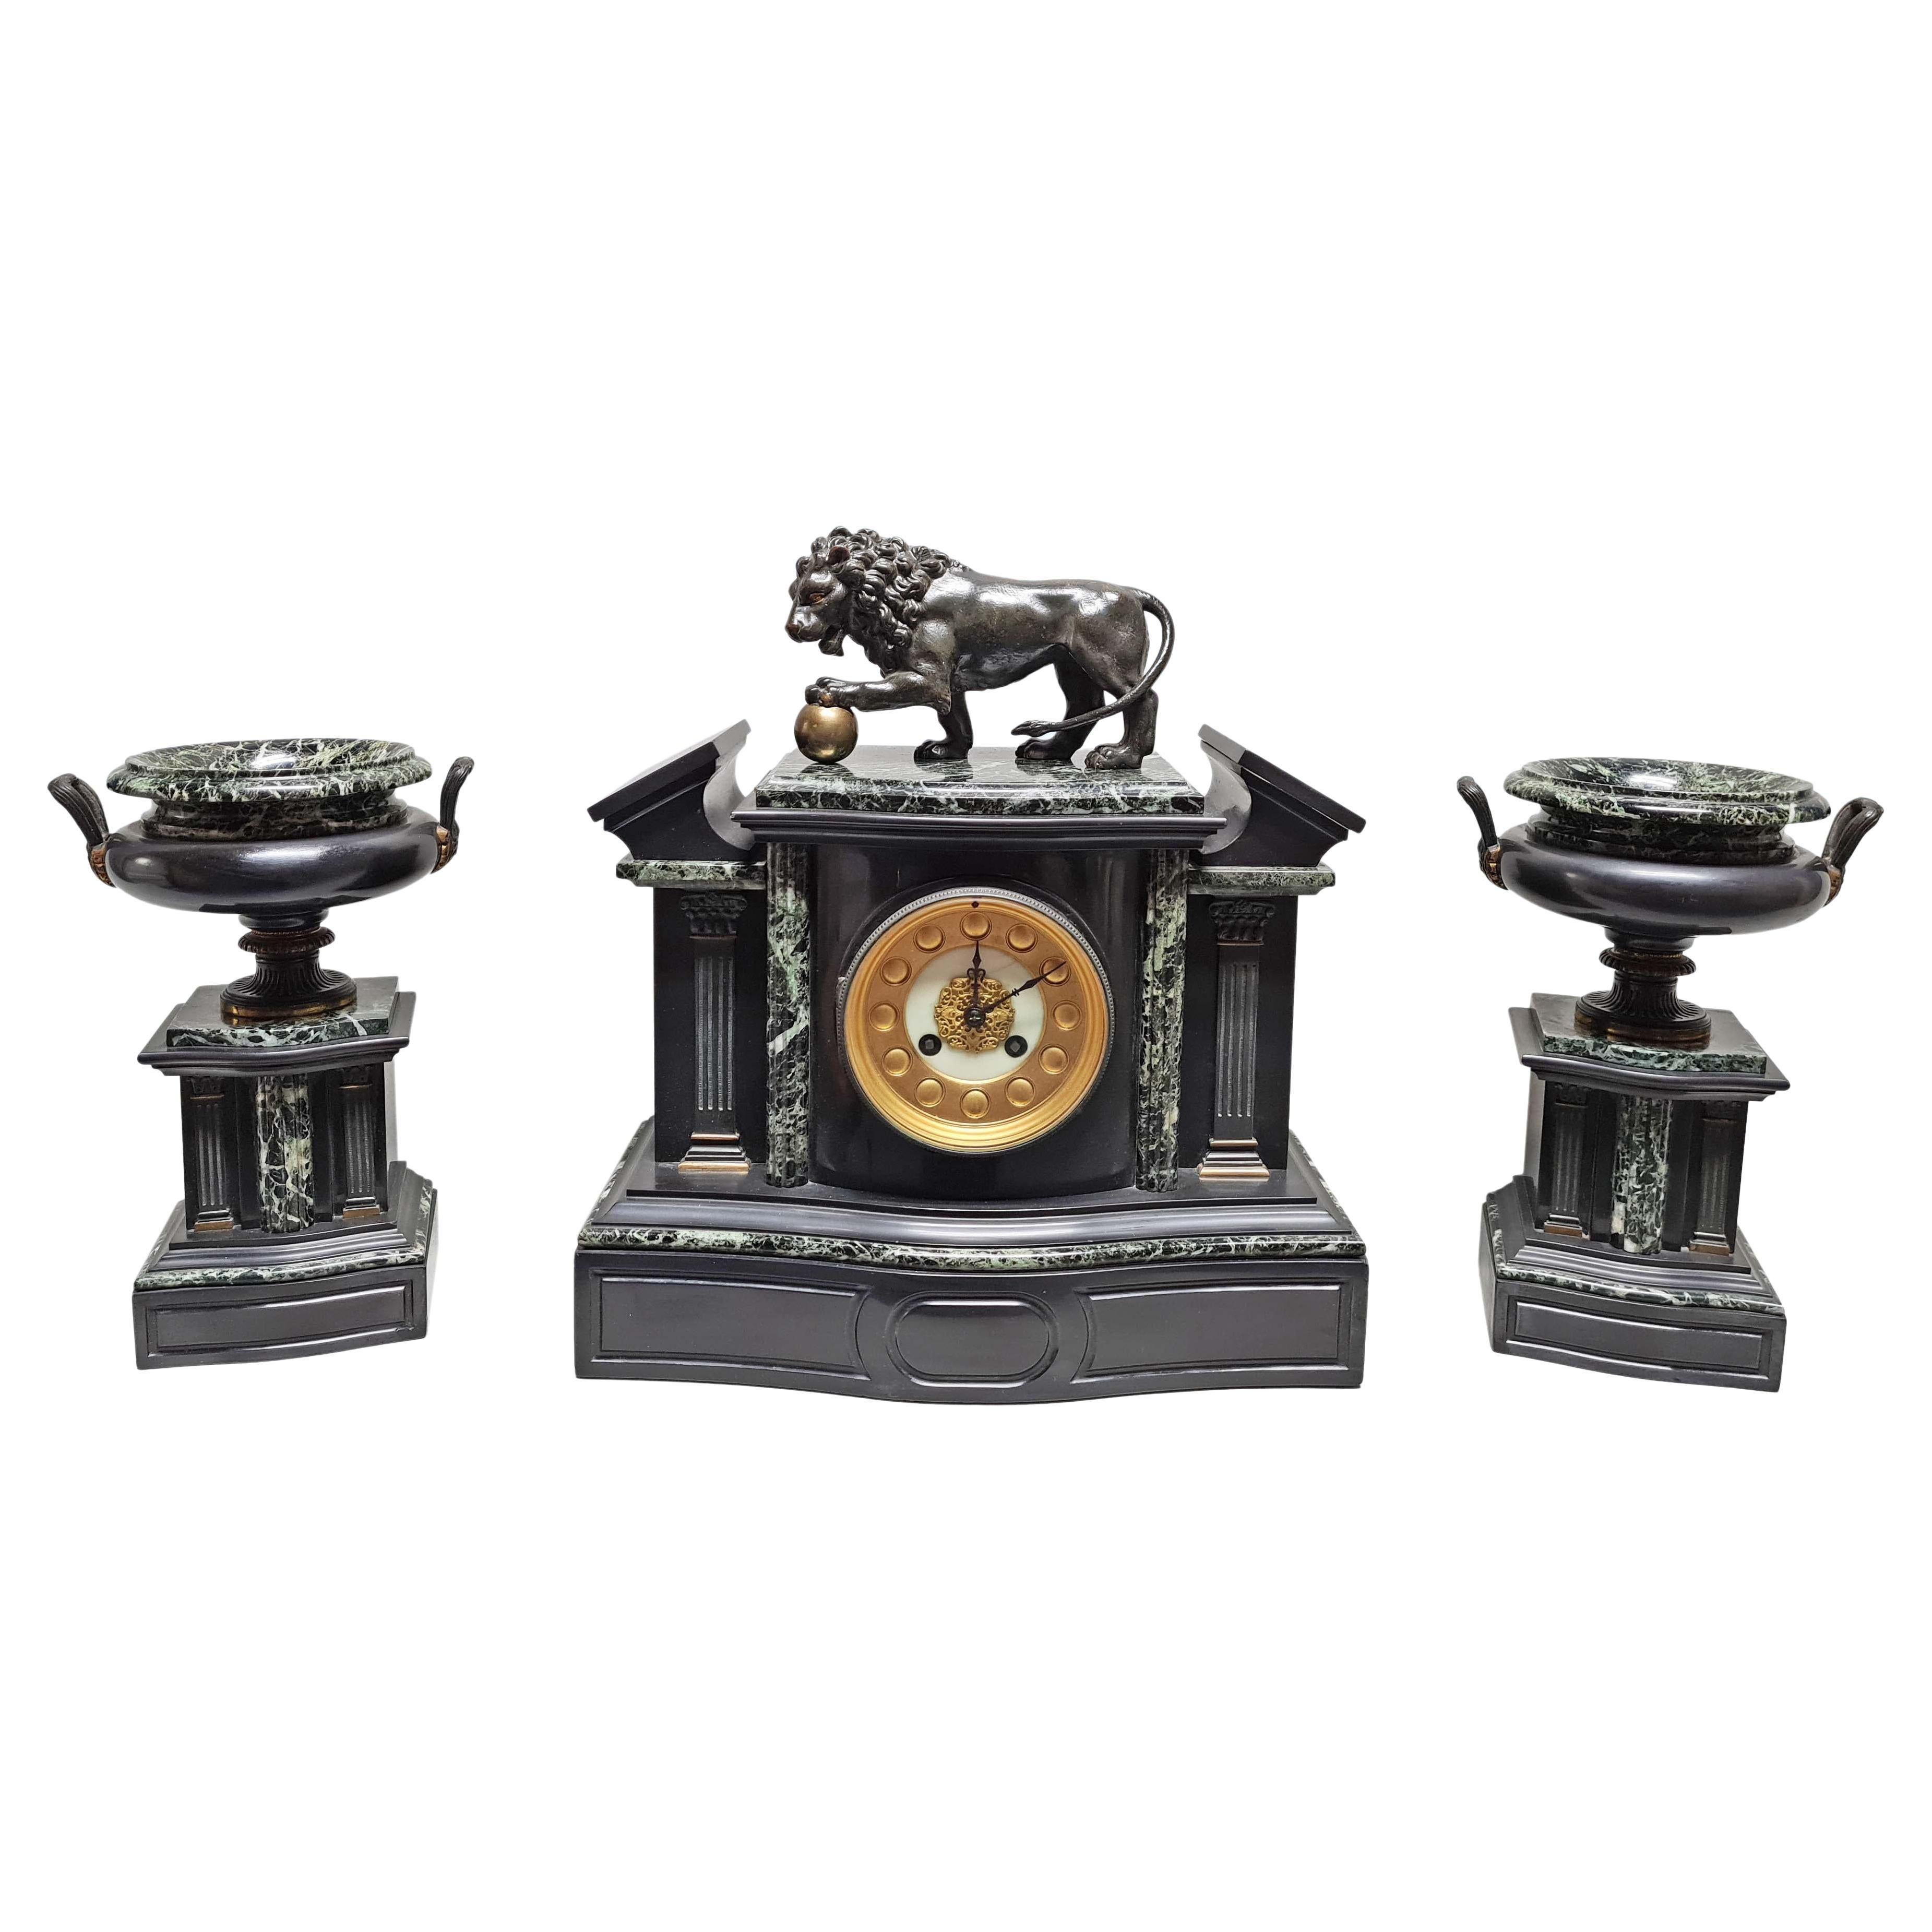 Architectural Clock Depicting Medici Lion & Cassolettes in Bronze, Set of 3 For Sale